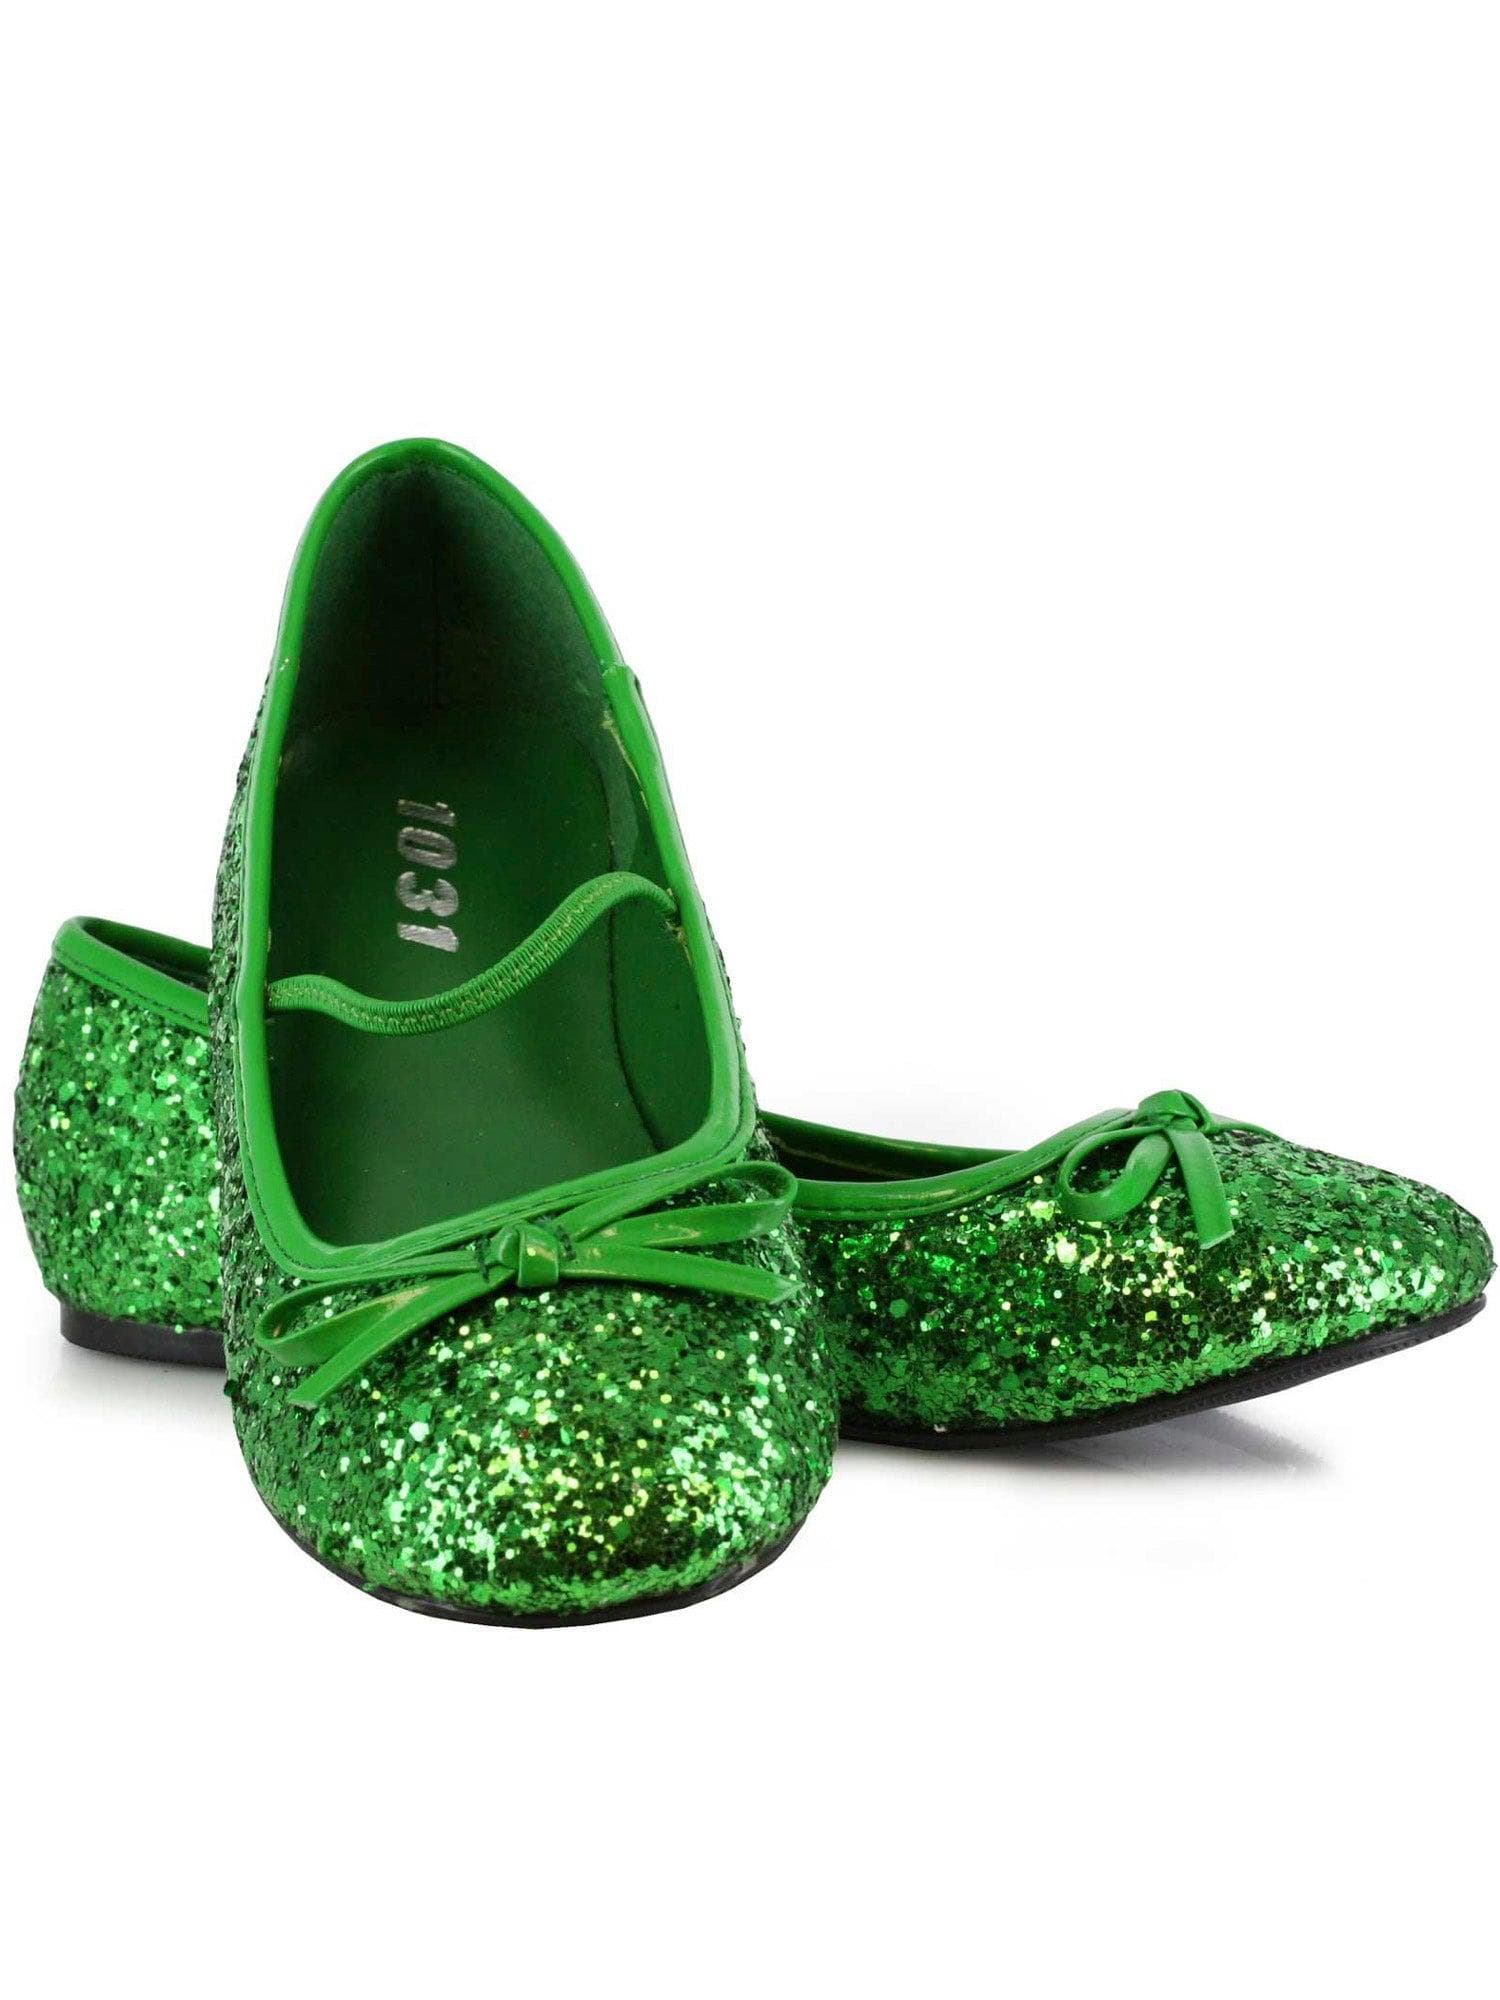 Kids Green Sparkle Ballet Shoes - costumes.com